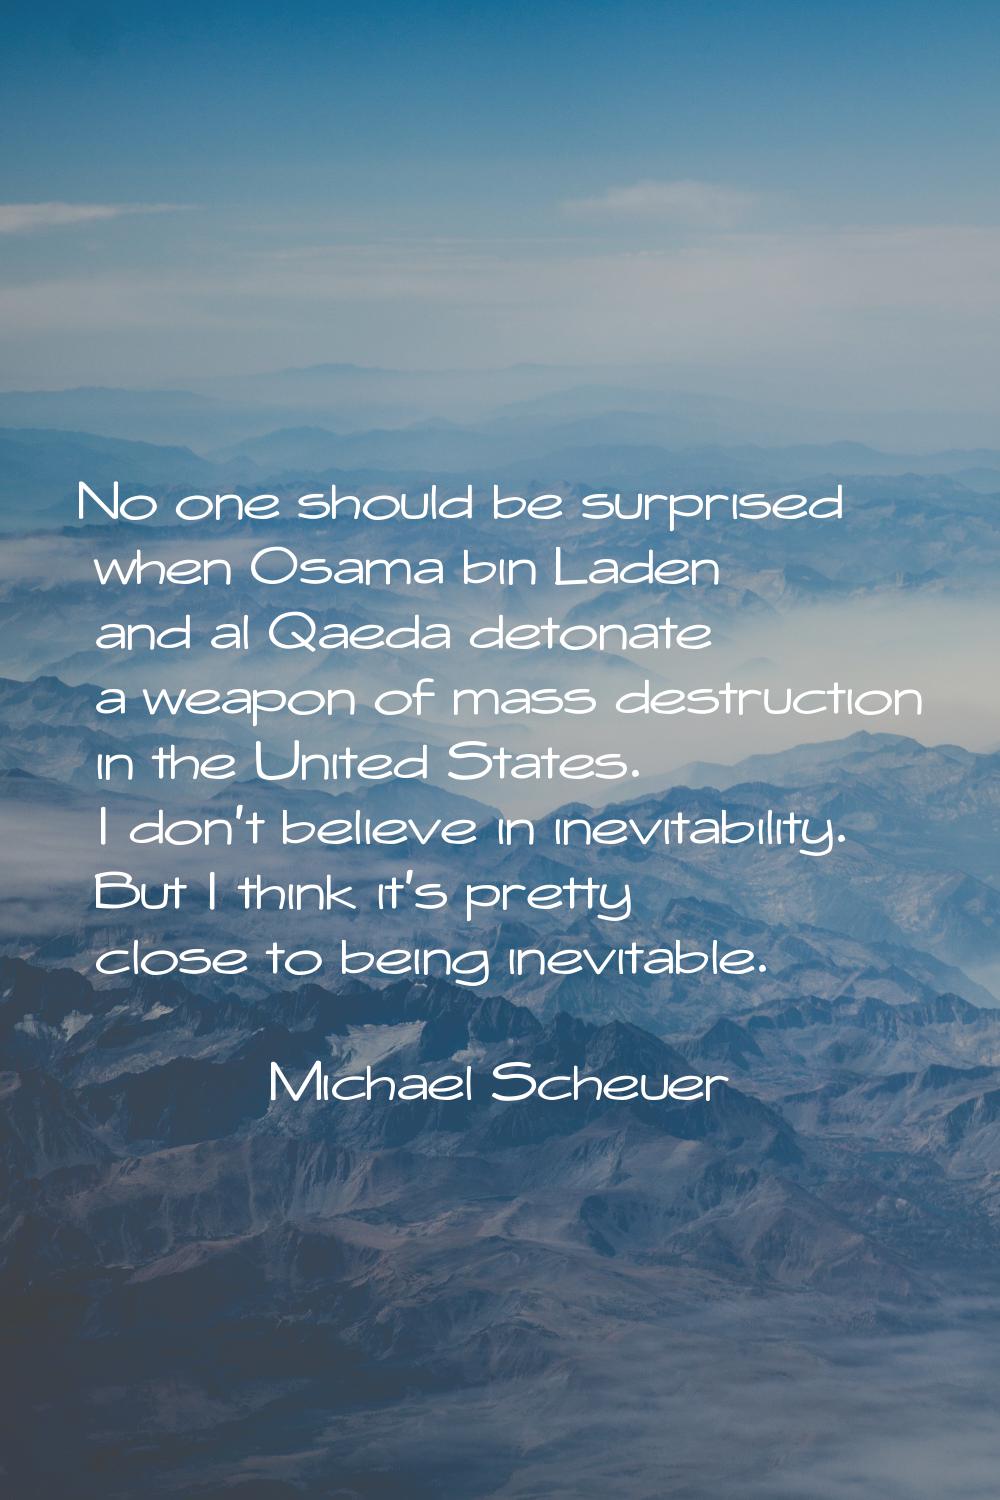 No one should be surprised when Osama bin Laden and al Qaeda detonate a weapon of mass destruction 